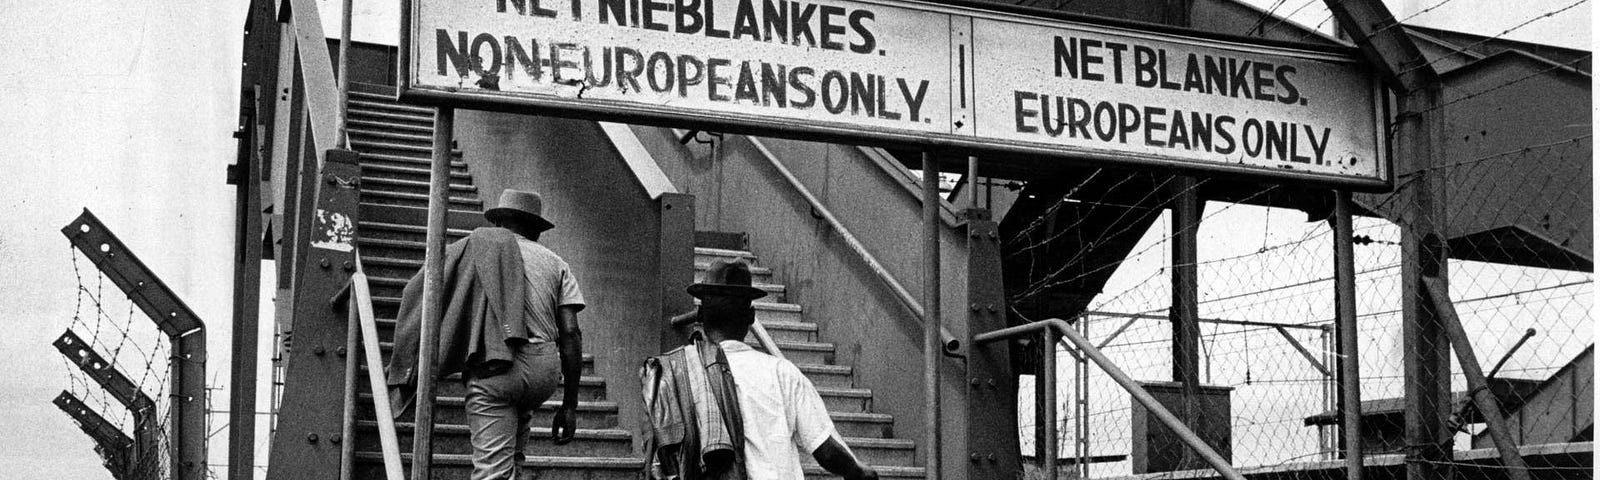 Segregational signs during Apartheid